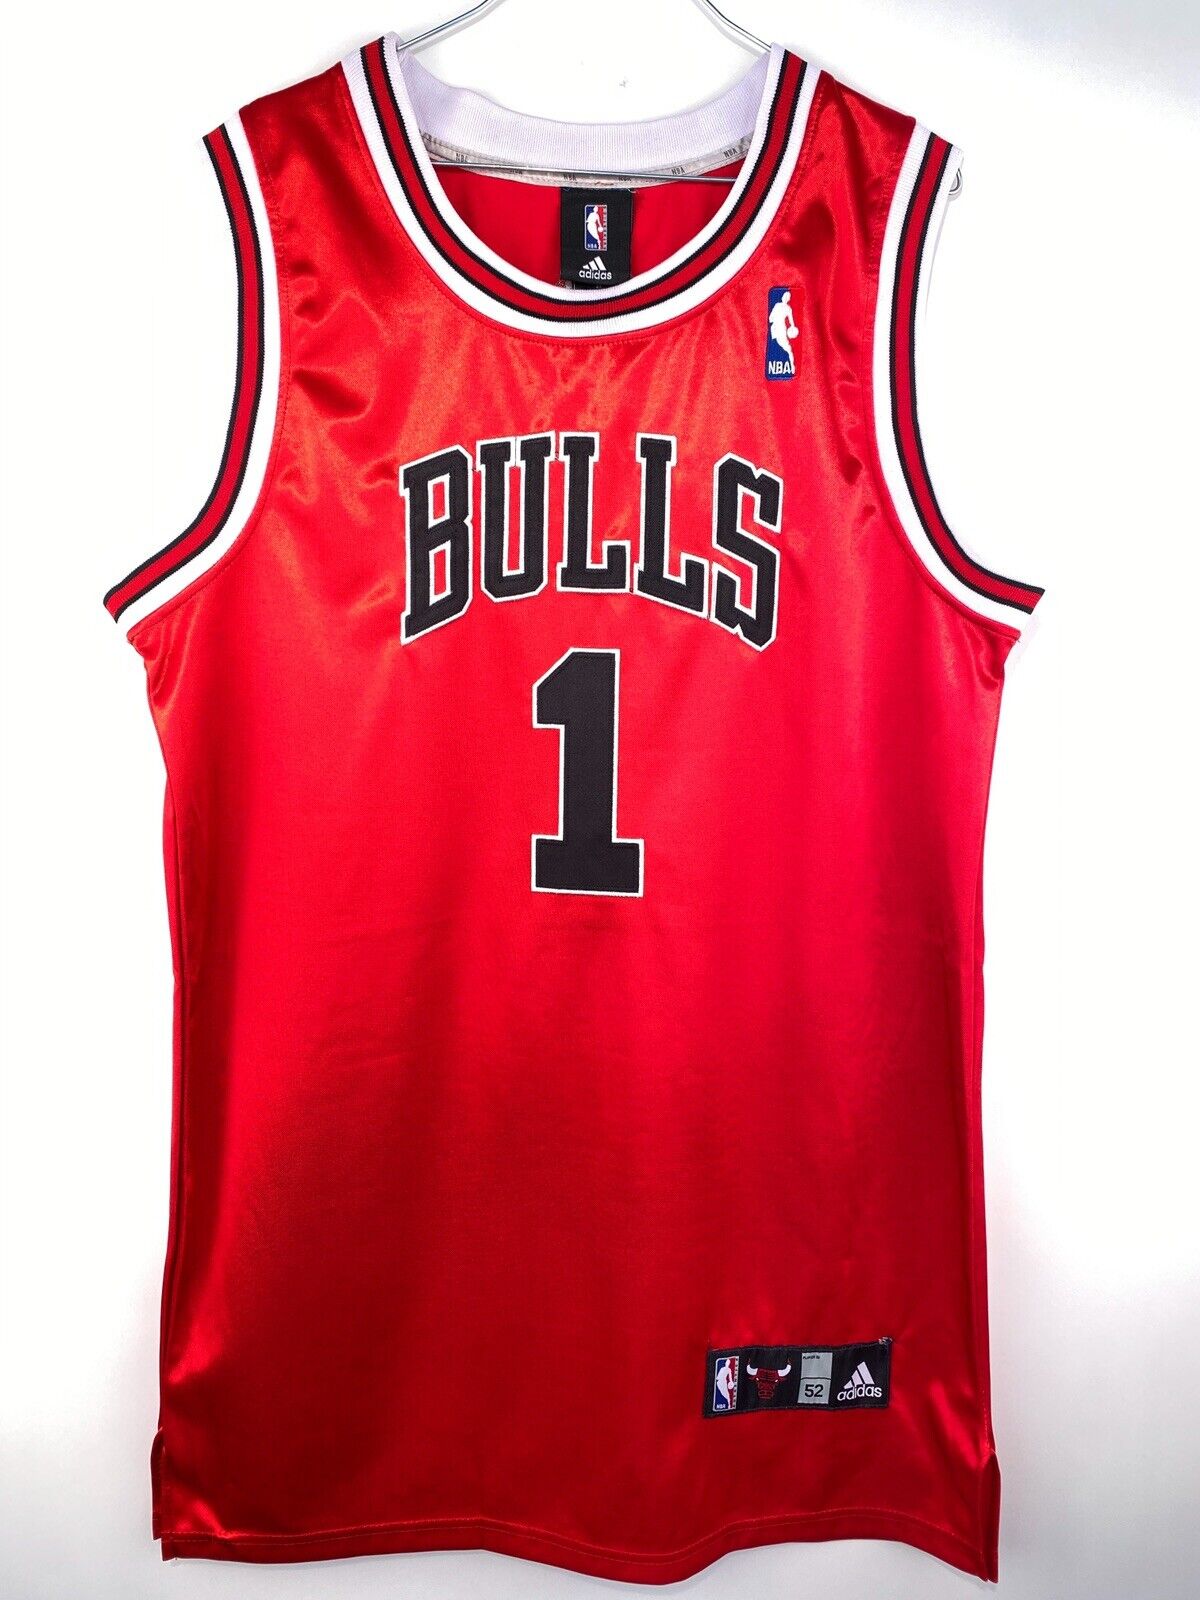 Authentic Rookie Derrick Rose Chicago Bulls white jersey adidas sz 40 / M  RARE !